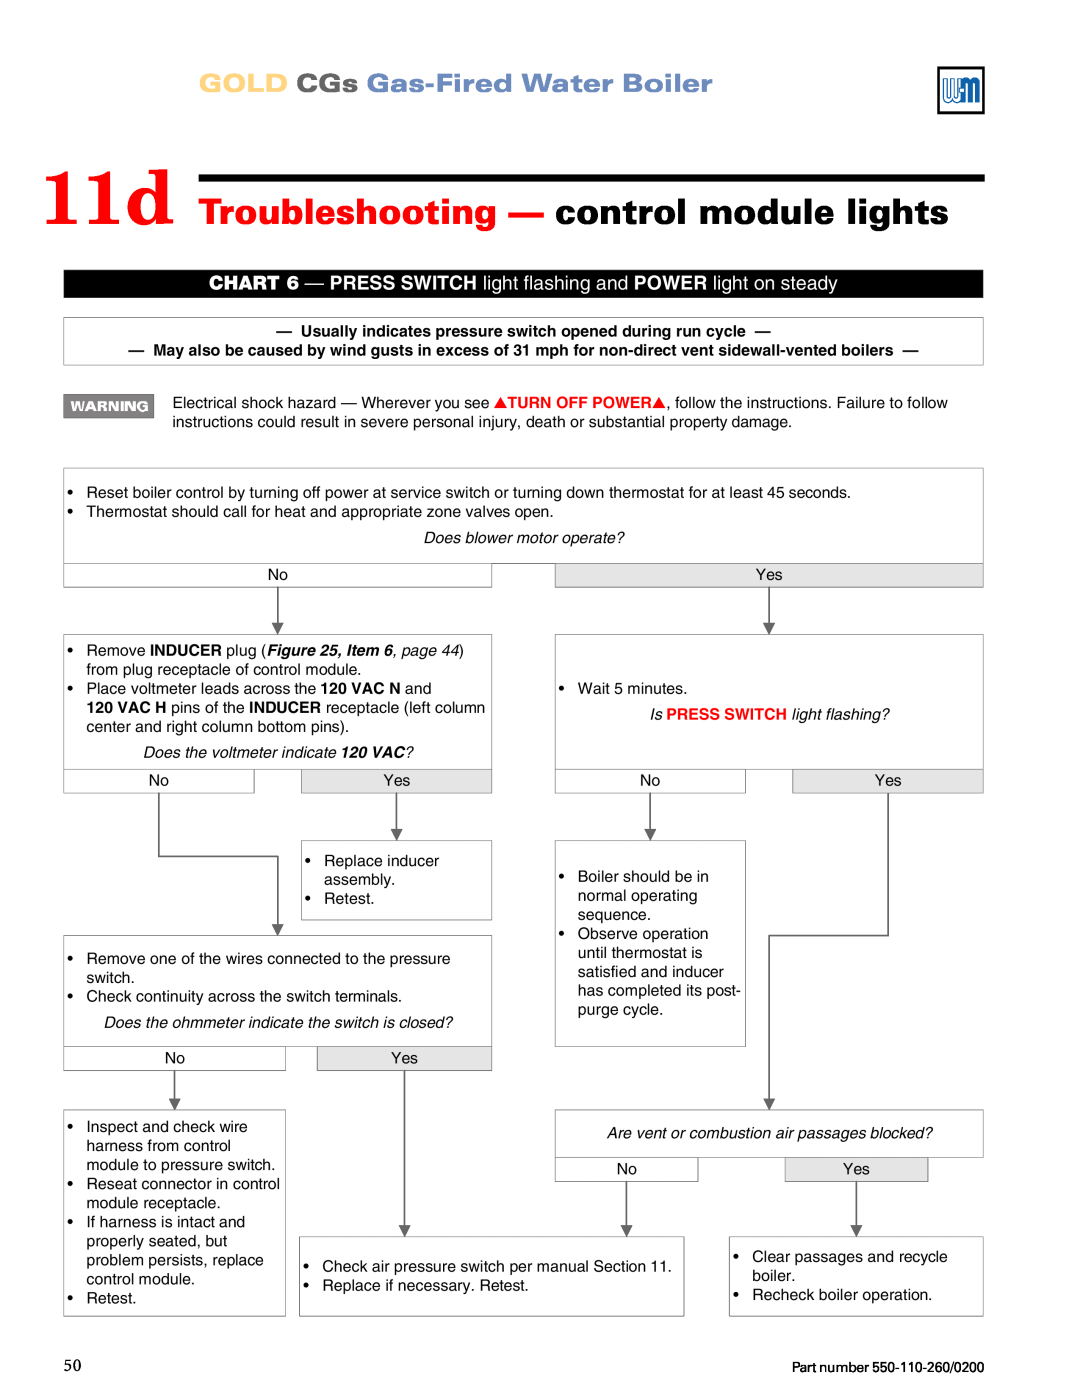 Weil-McLain 550-110-260/02002 manual 11d Troubleshooting — control module lights, GOLD CGs Gas-FiredWater Boiler 